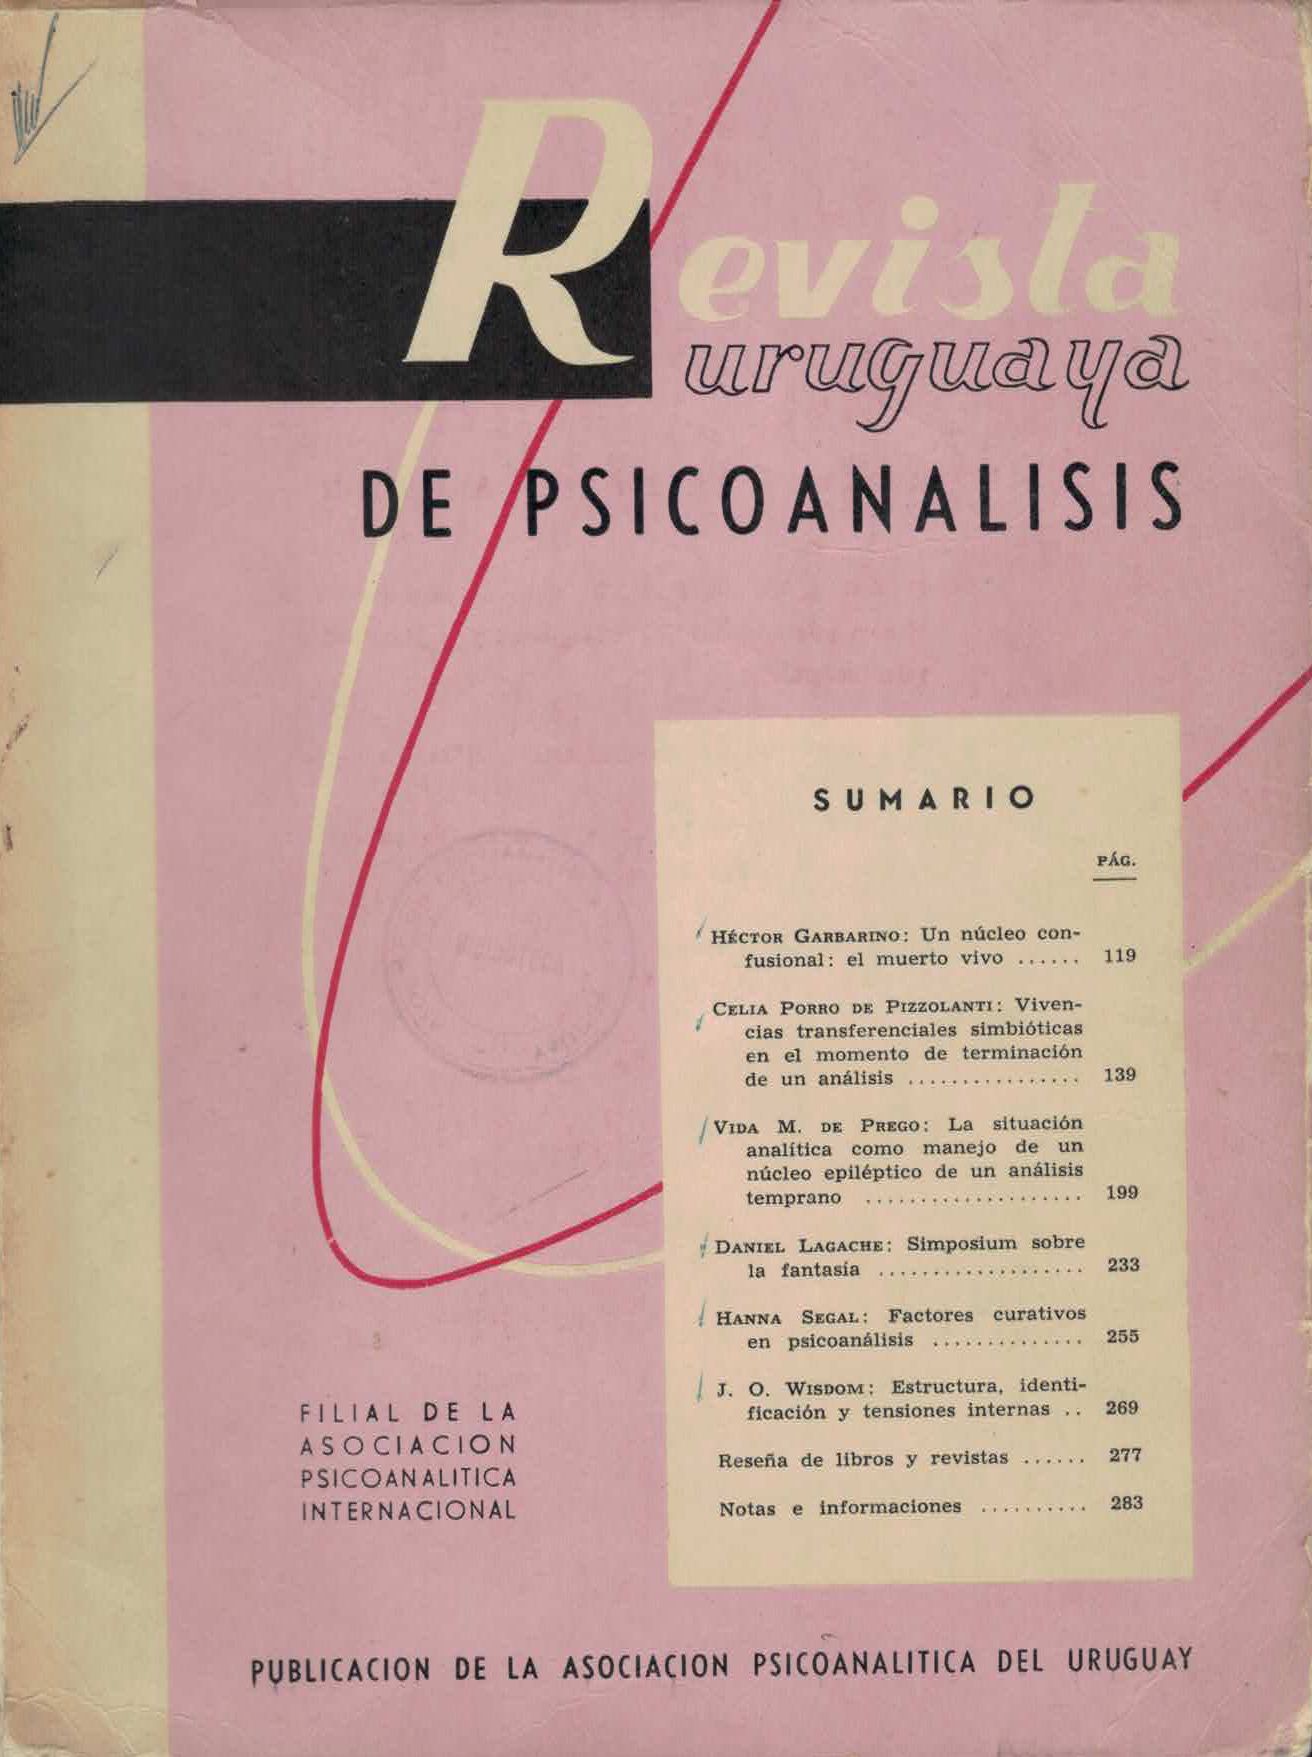 					Ver Vol. 7 Núm. 2-3 (1965): Revista Uruguaya de Psicoanálisis
				